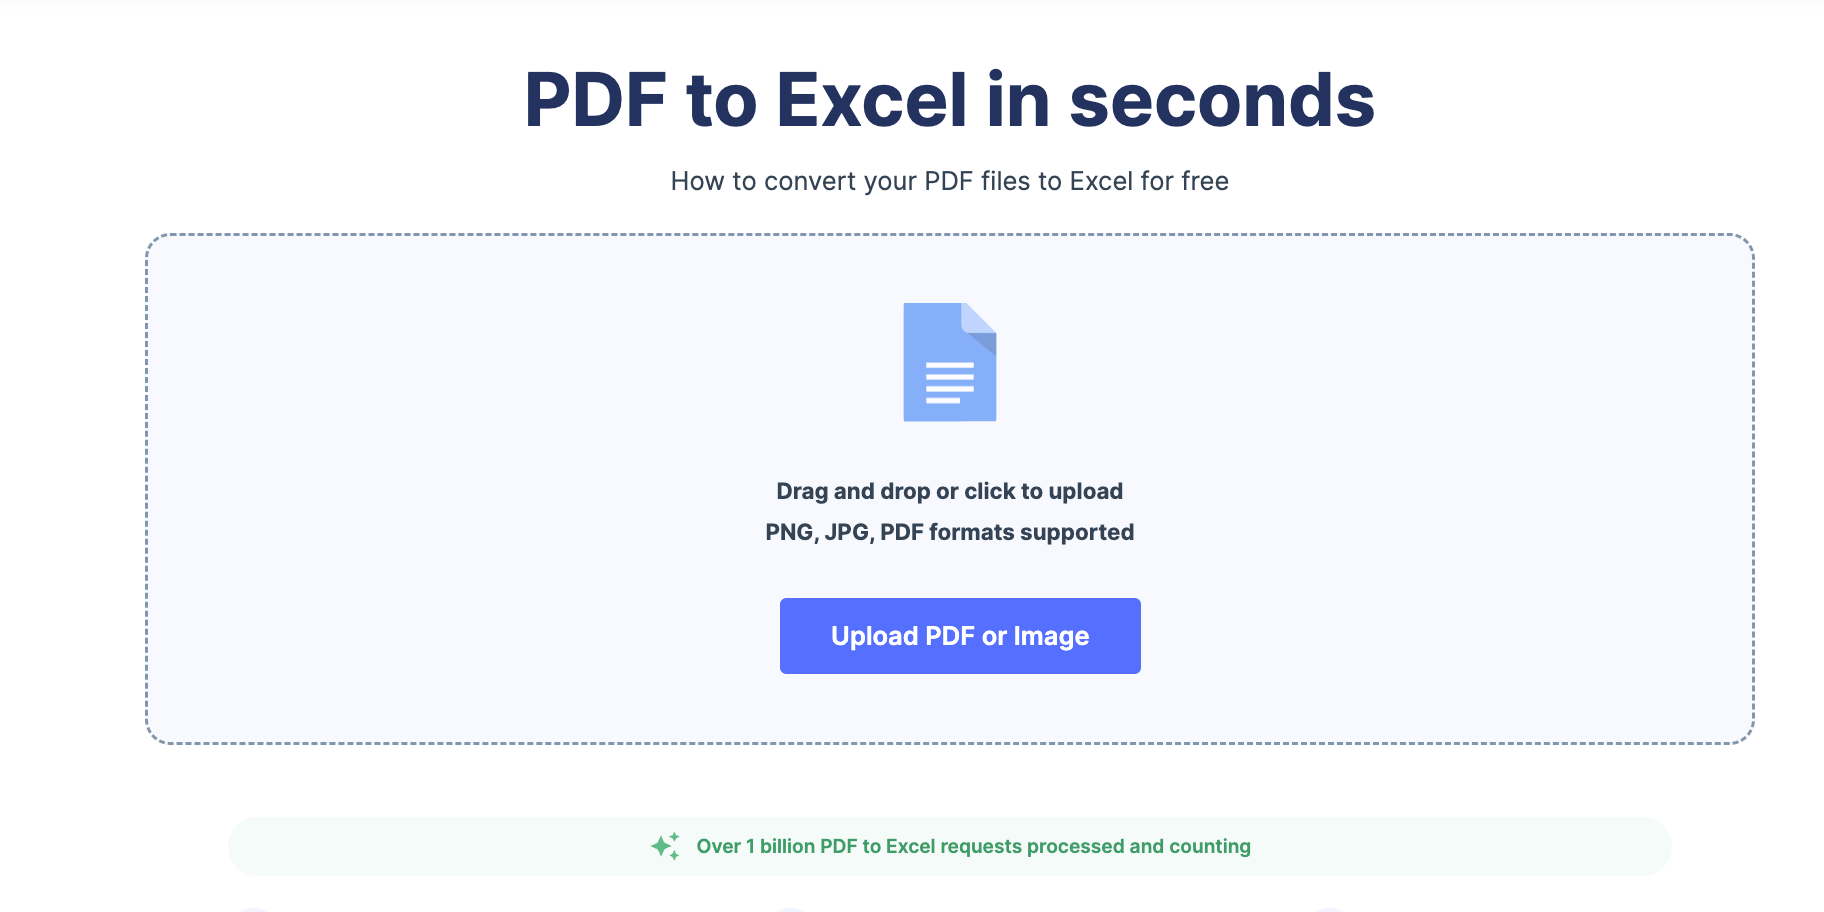 Nanonets PDF to Excel Converter